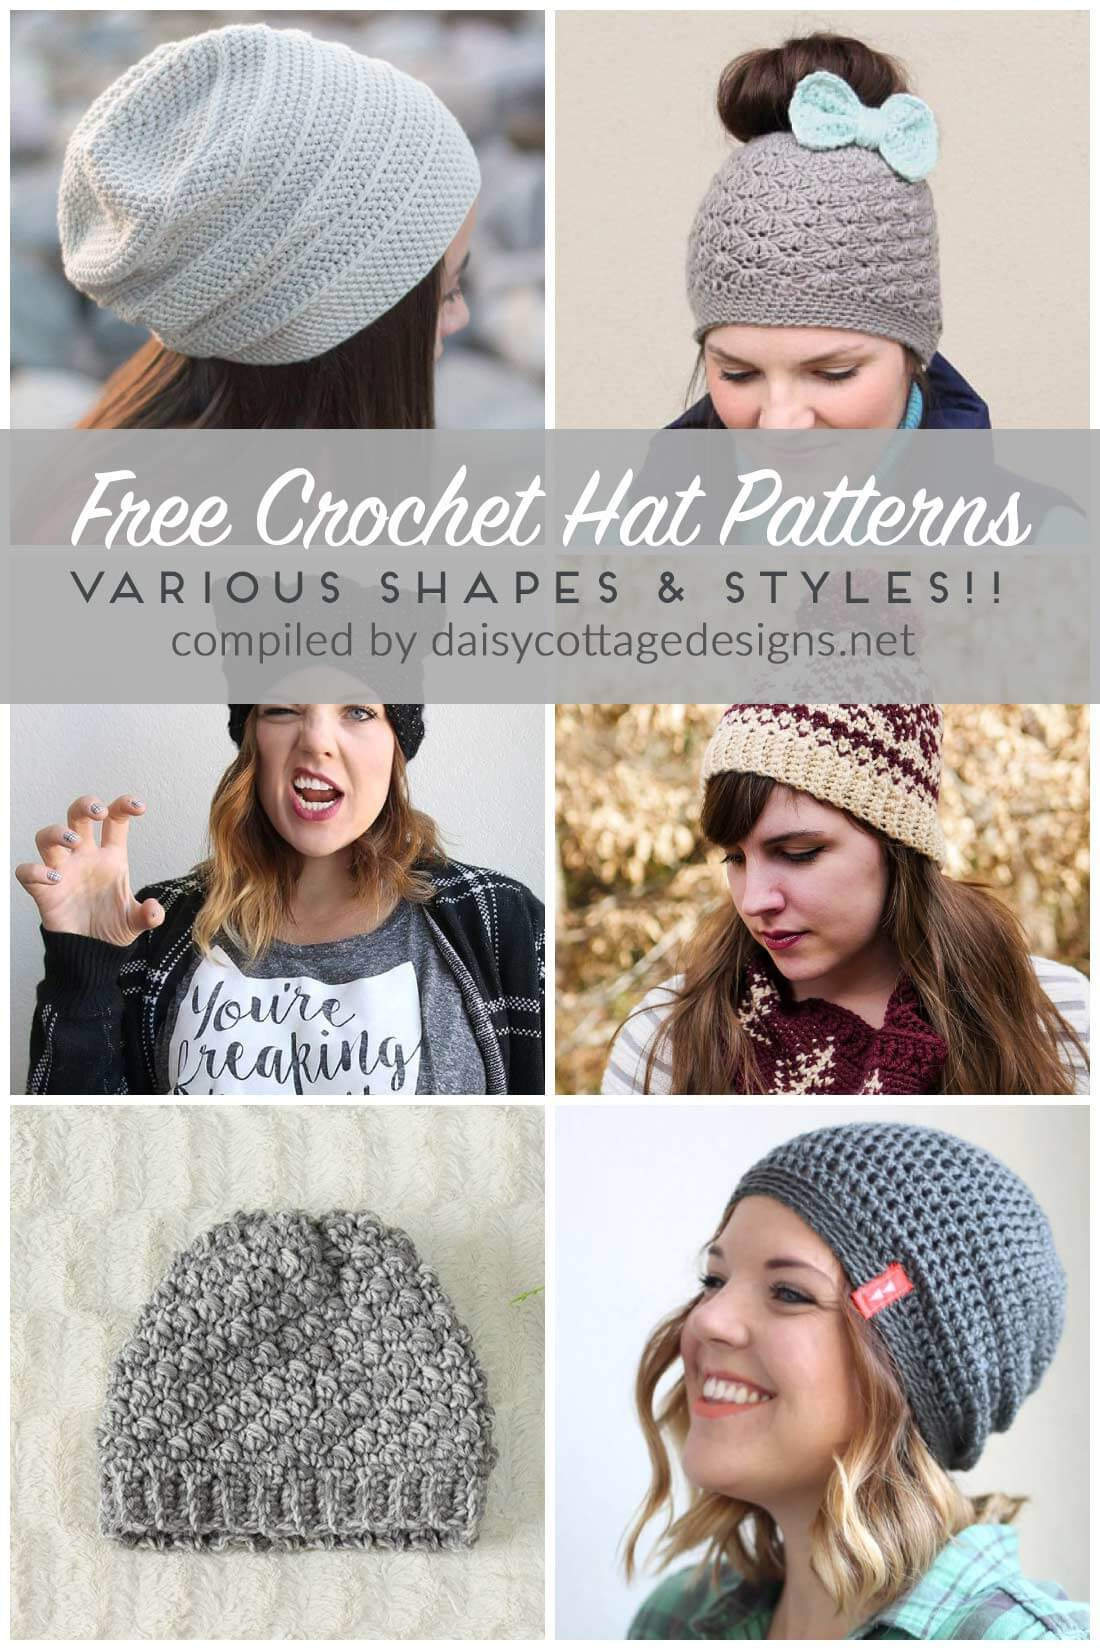 Crochet Bobble Hat Pattern Free Free Crochet Hat Patterns Daisy Cottage Designs